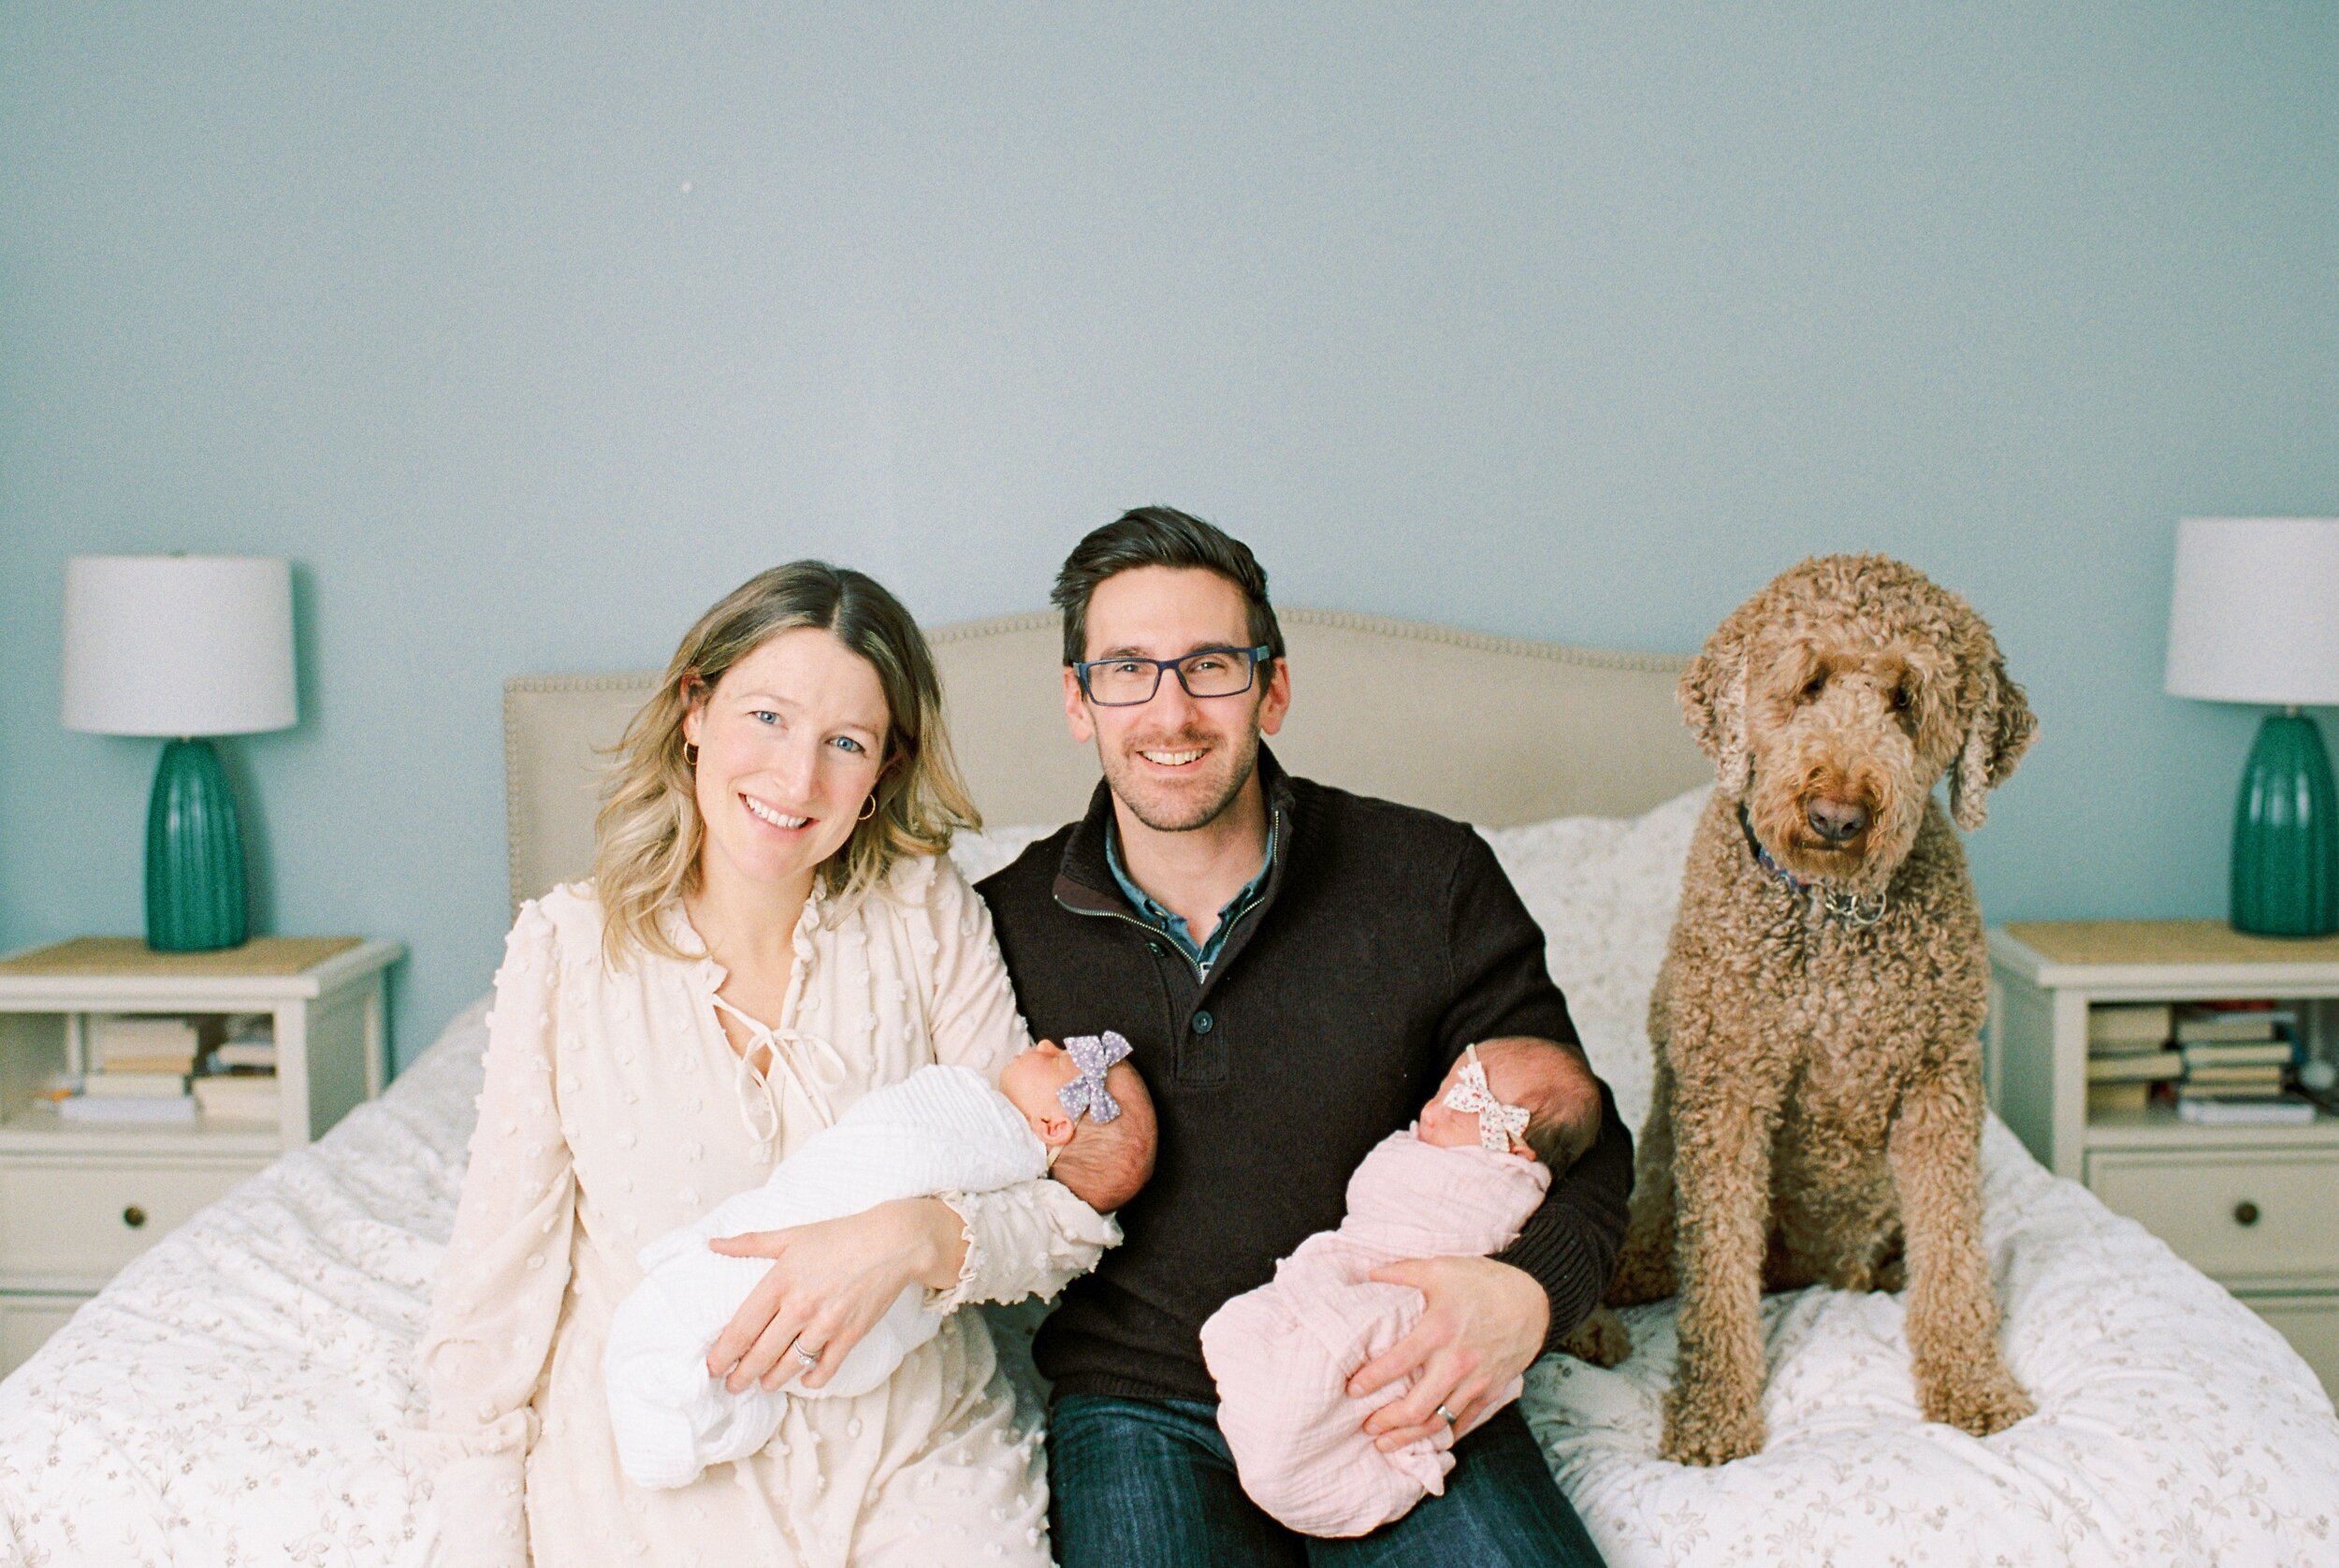  Calgary Newborn Photographer | twin baby girls | family of 5 | film photography 